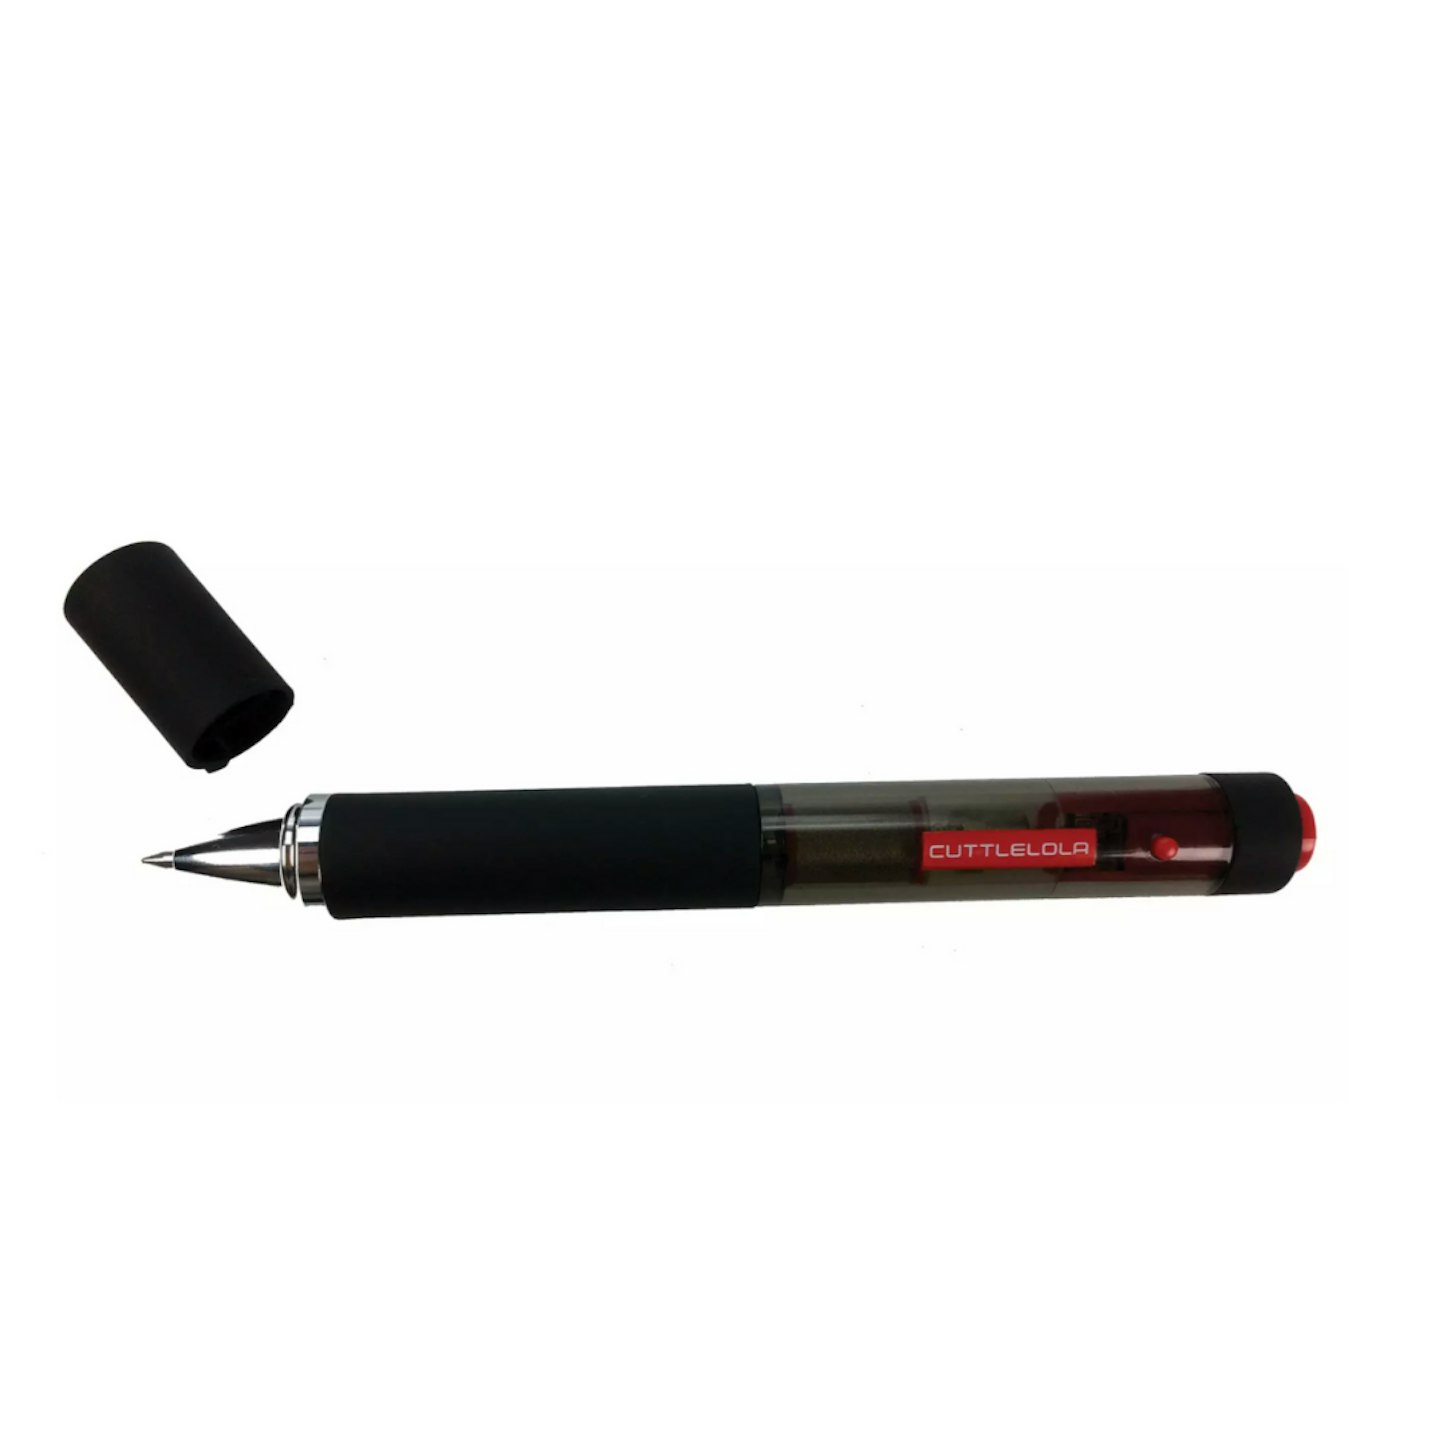 Dotspen - Rechargable Multi-speed Electric Drawing Pen